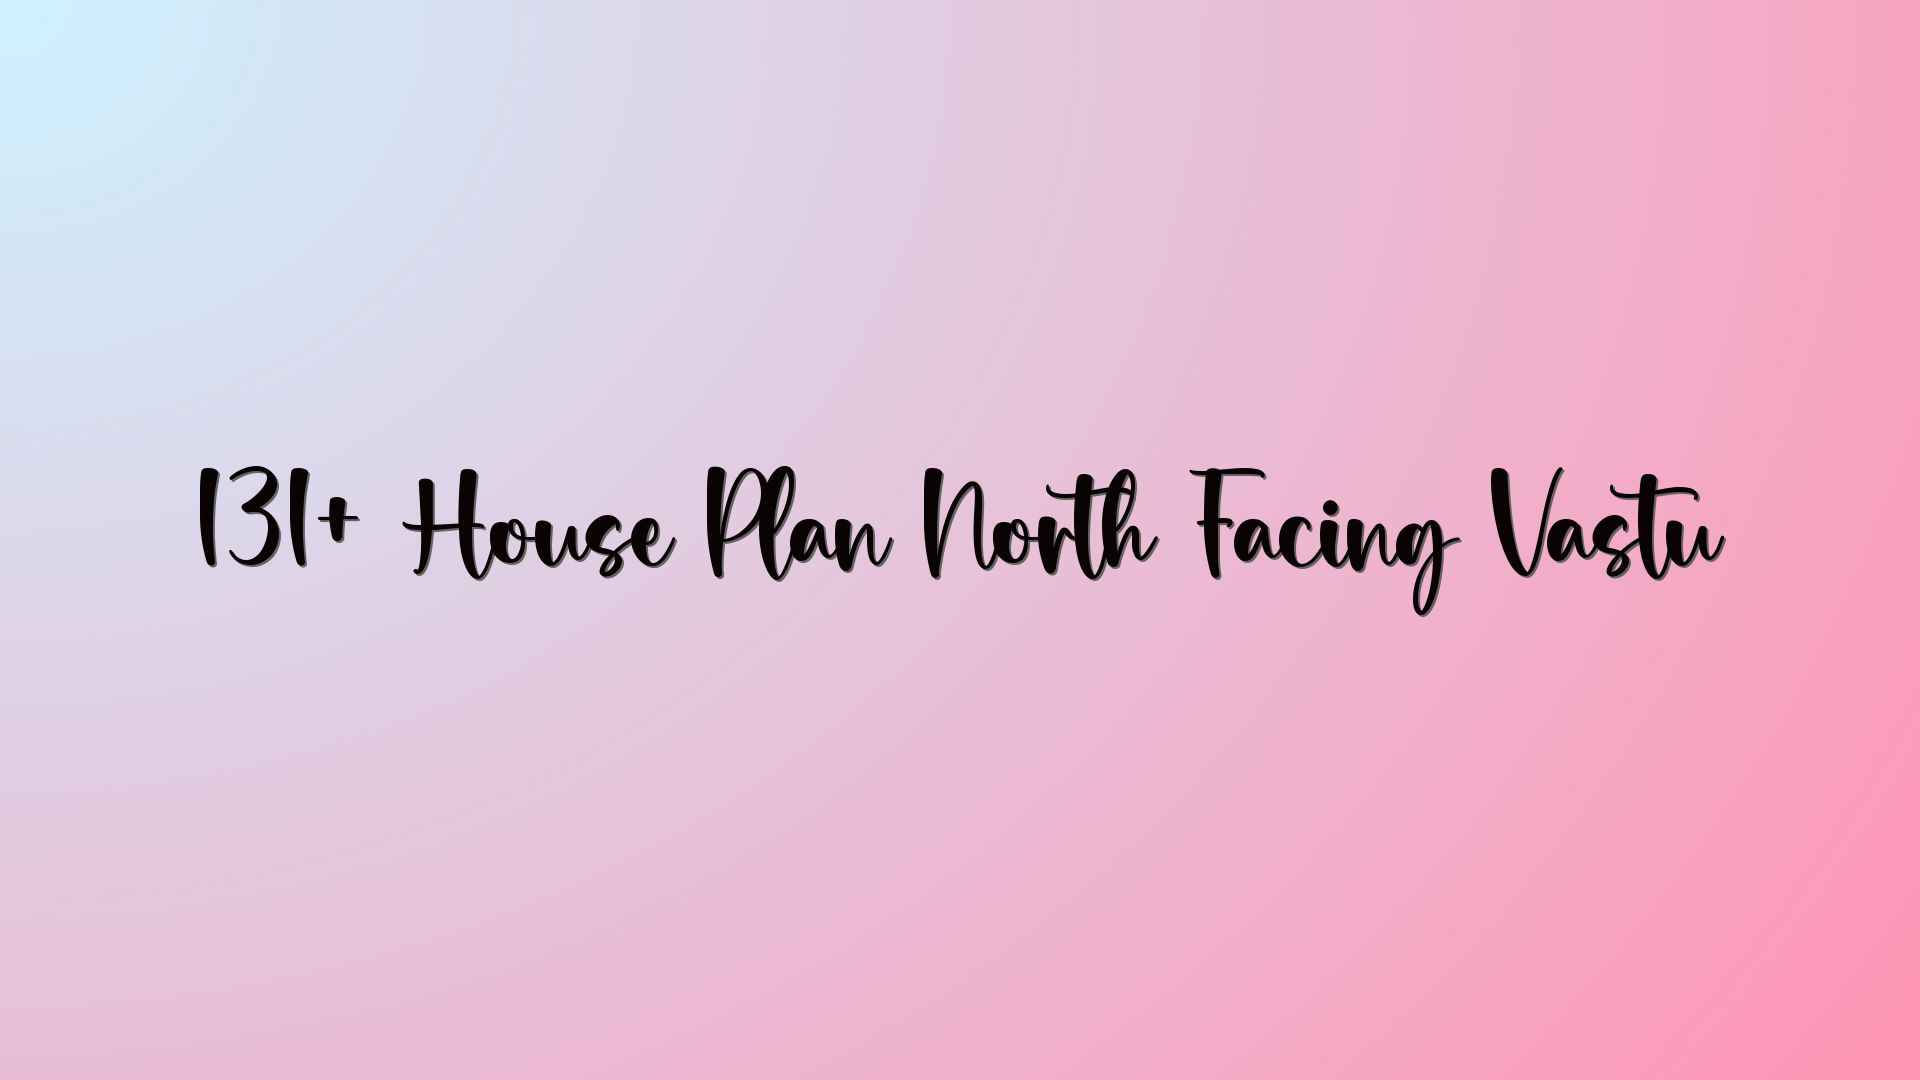 131+ House Plan North Facing Vastu